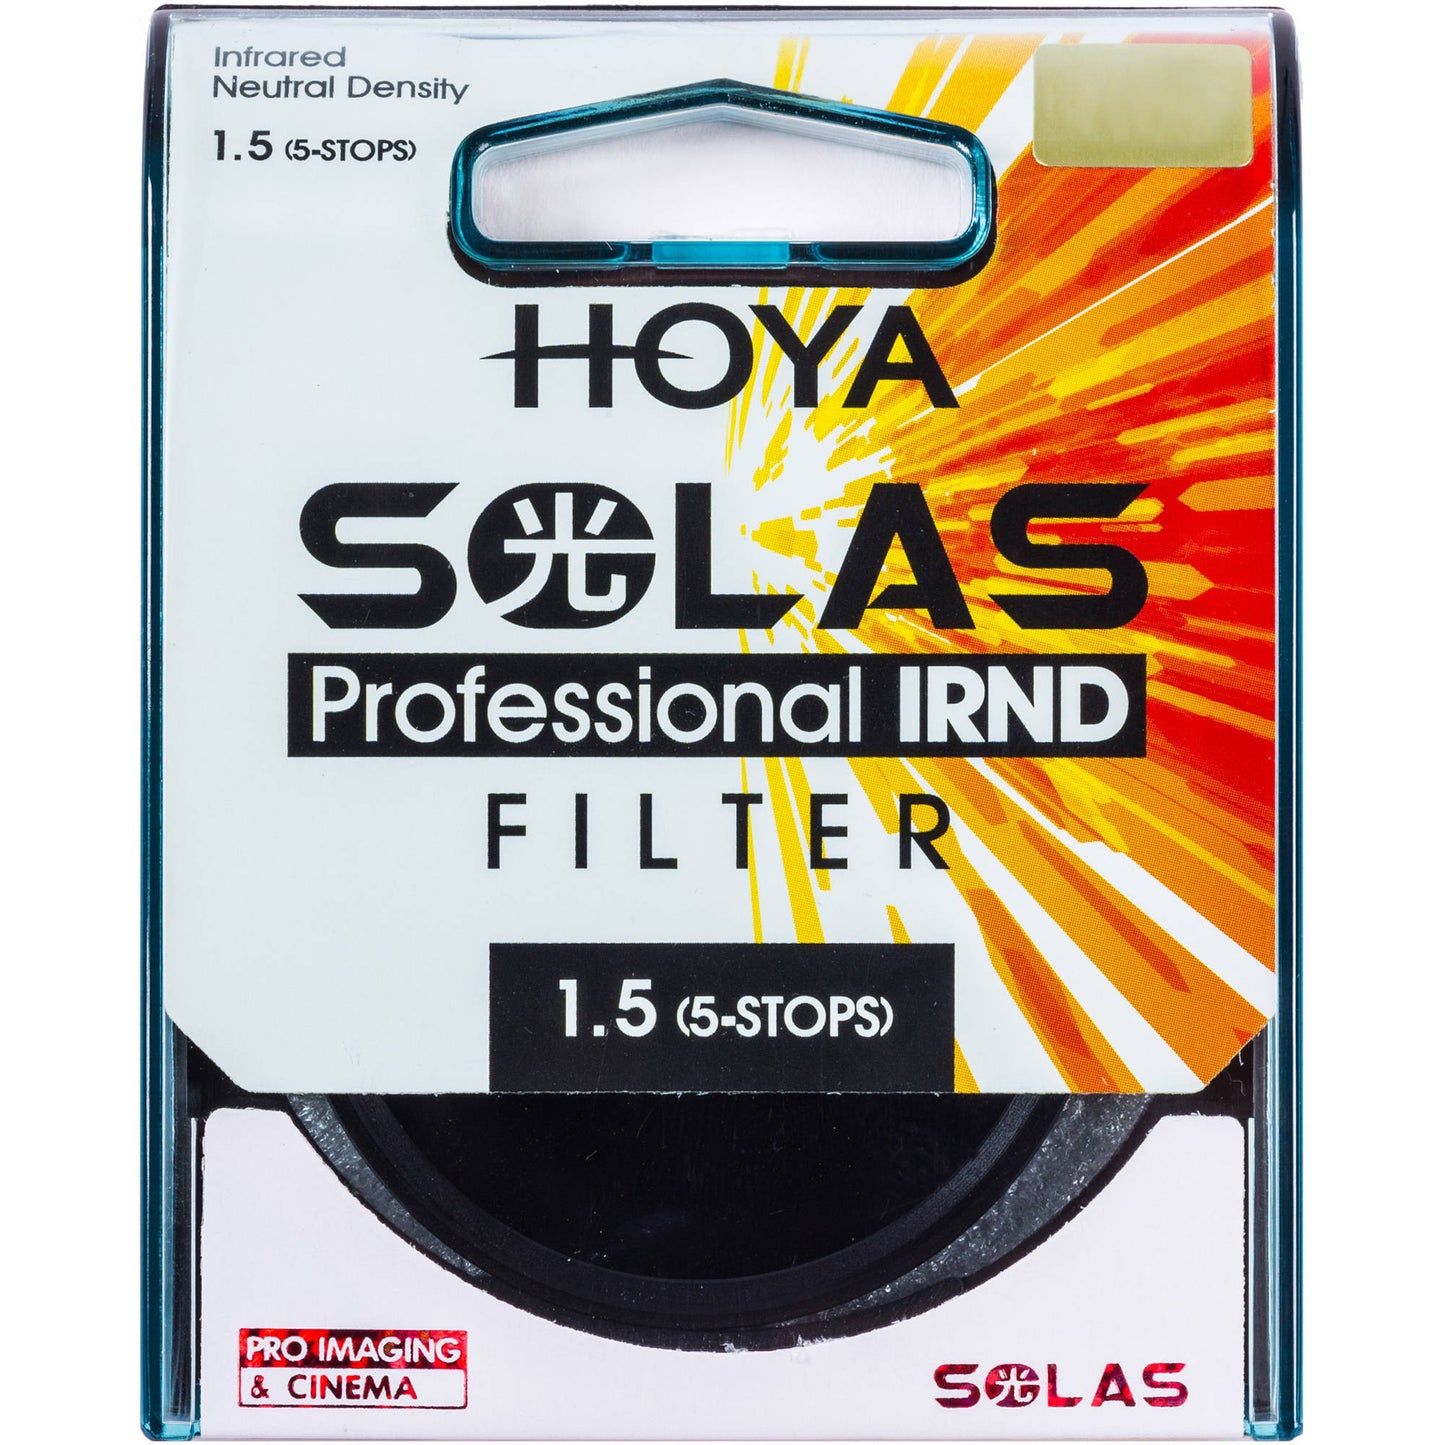 Hoya SOLAS Professional IRND 1.5 Filter [Multiple Size Options]